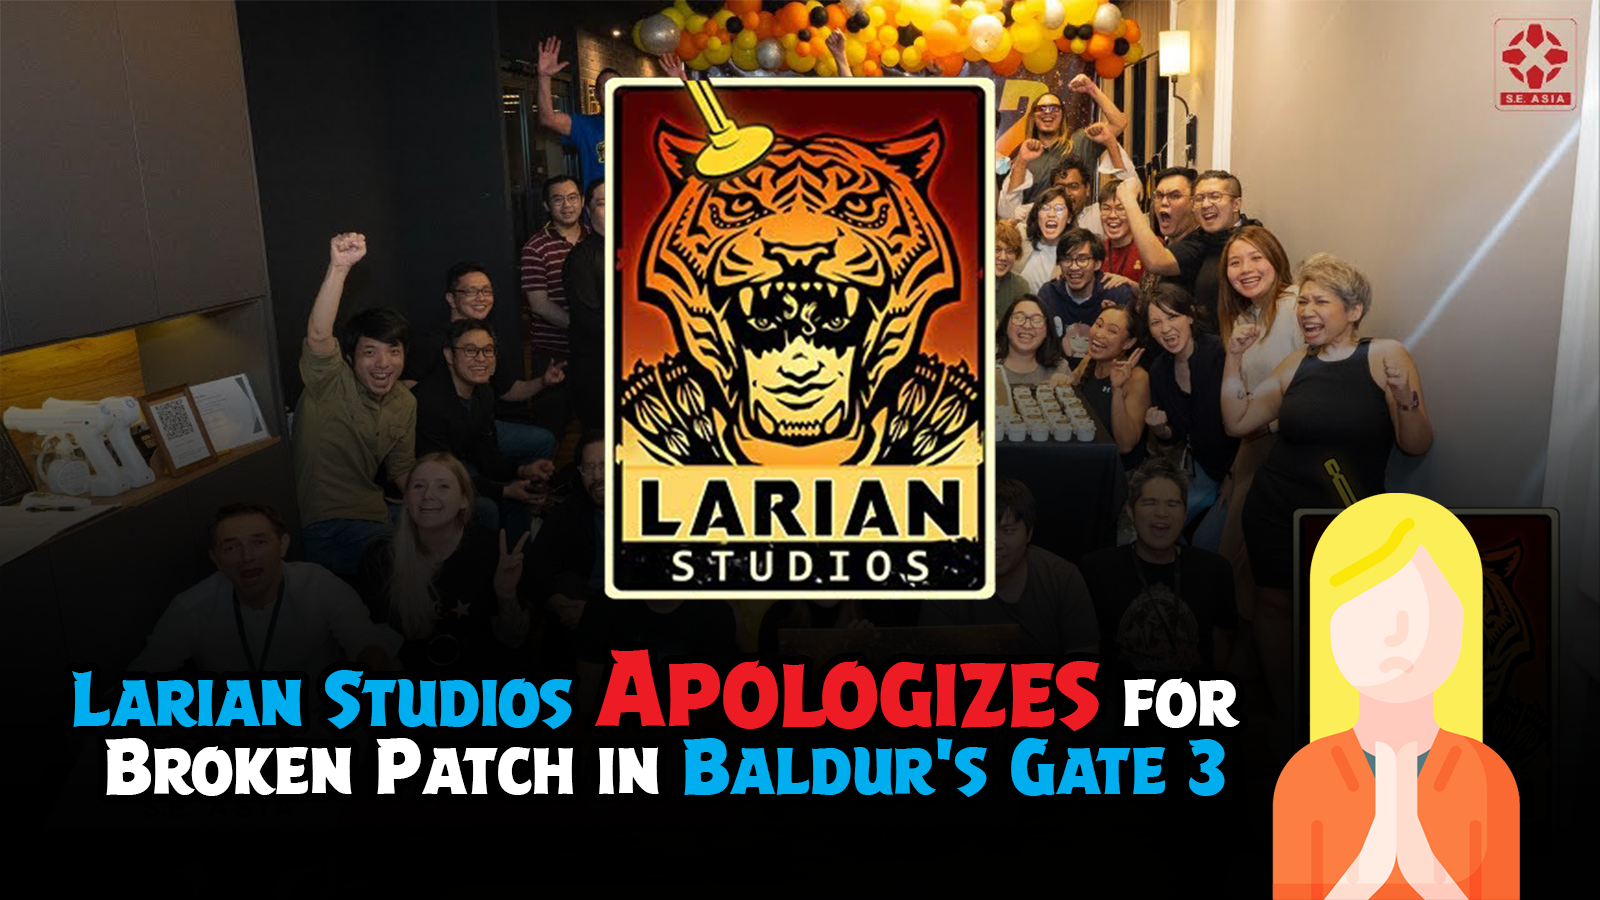 Baldur’s Gate 3 Developer Apologizes and Vows to Prevent Future Broken Patches